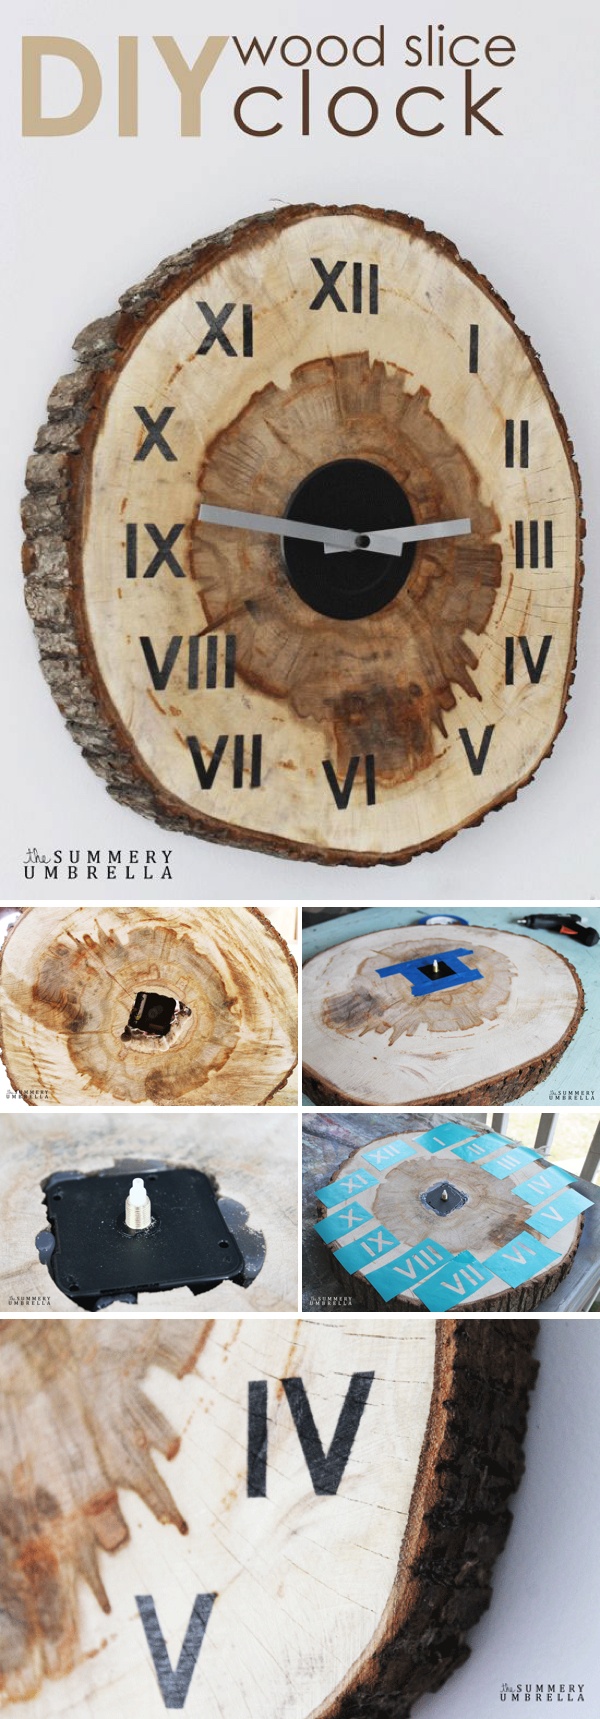 DIY Wood Slice Clock